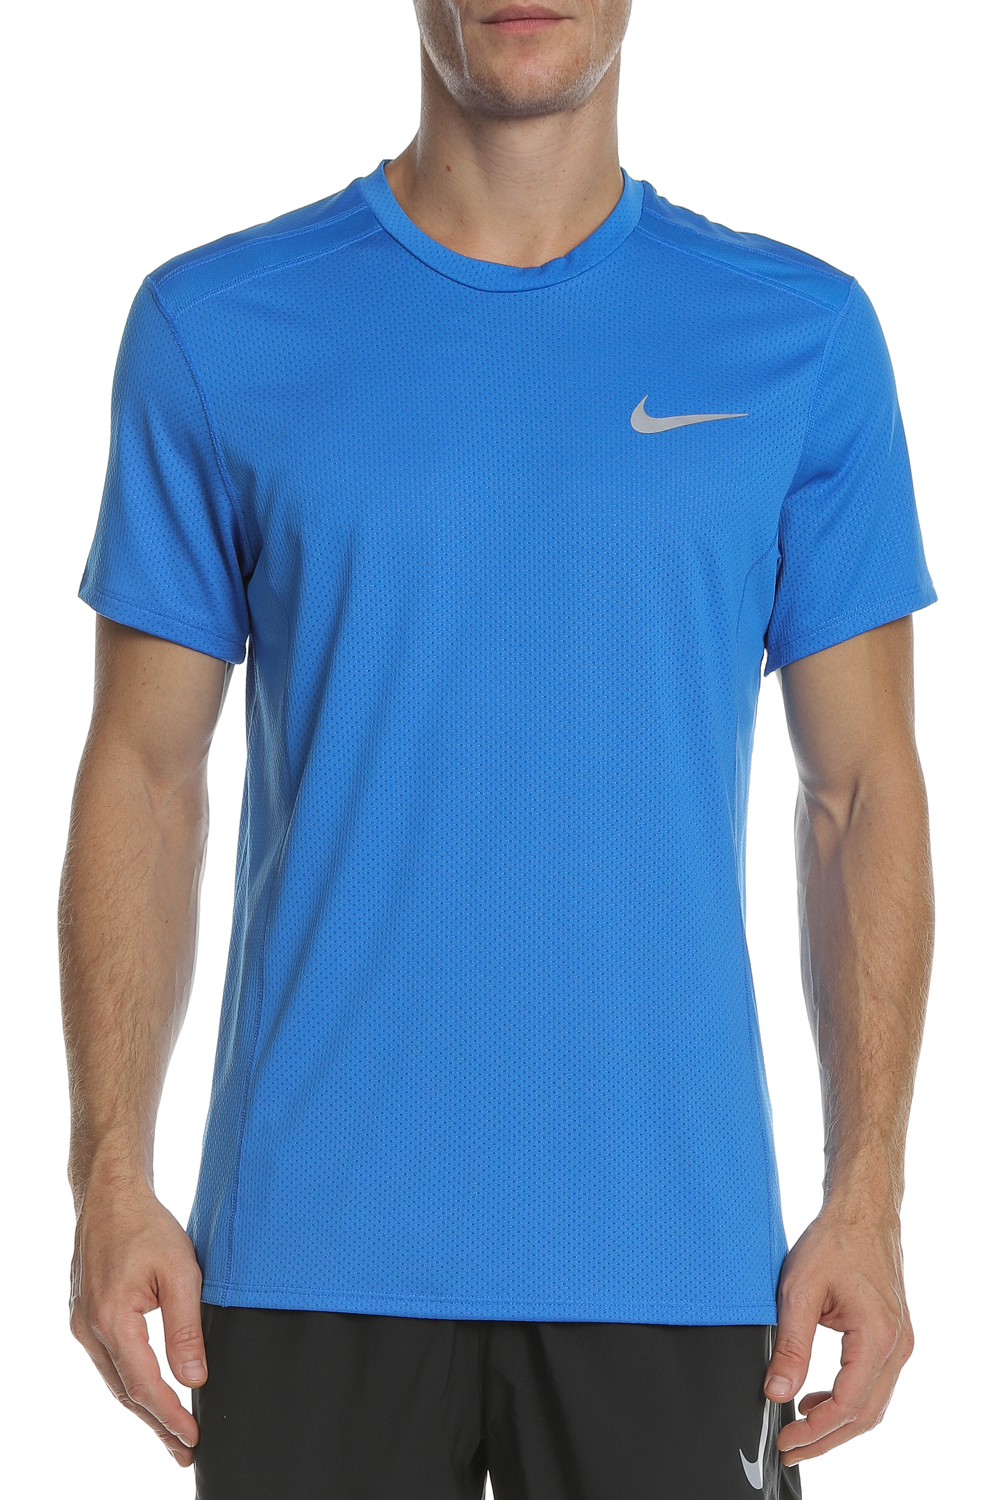 NIKE - Ανδρική κοντομάνικη μπλούζα NIKE COOL MILER TOP SS μπλε Ανδρικά/Ρούχα/Αθλητικά/T-shirt